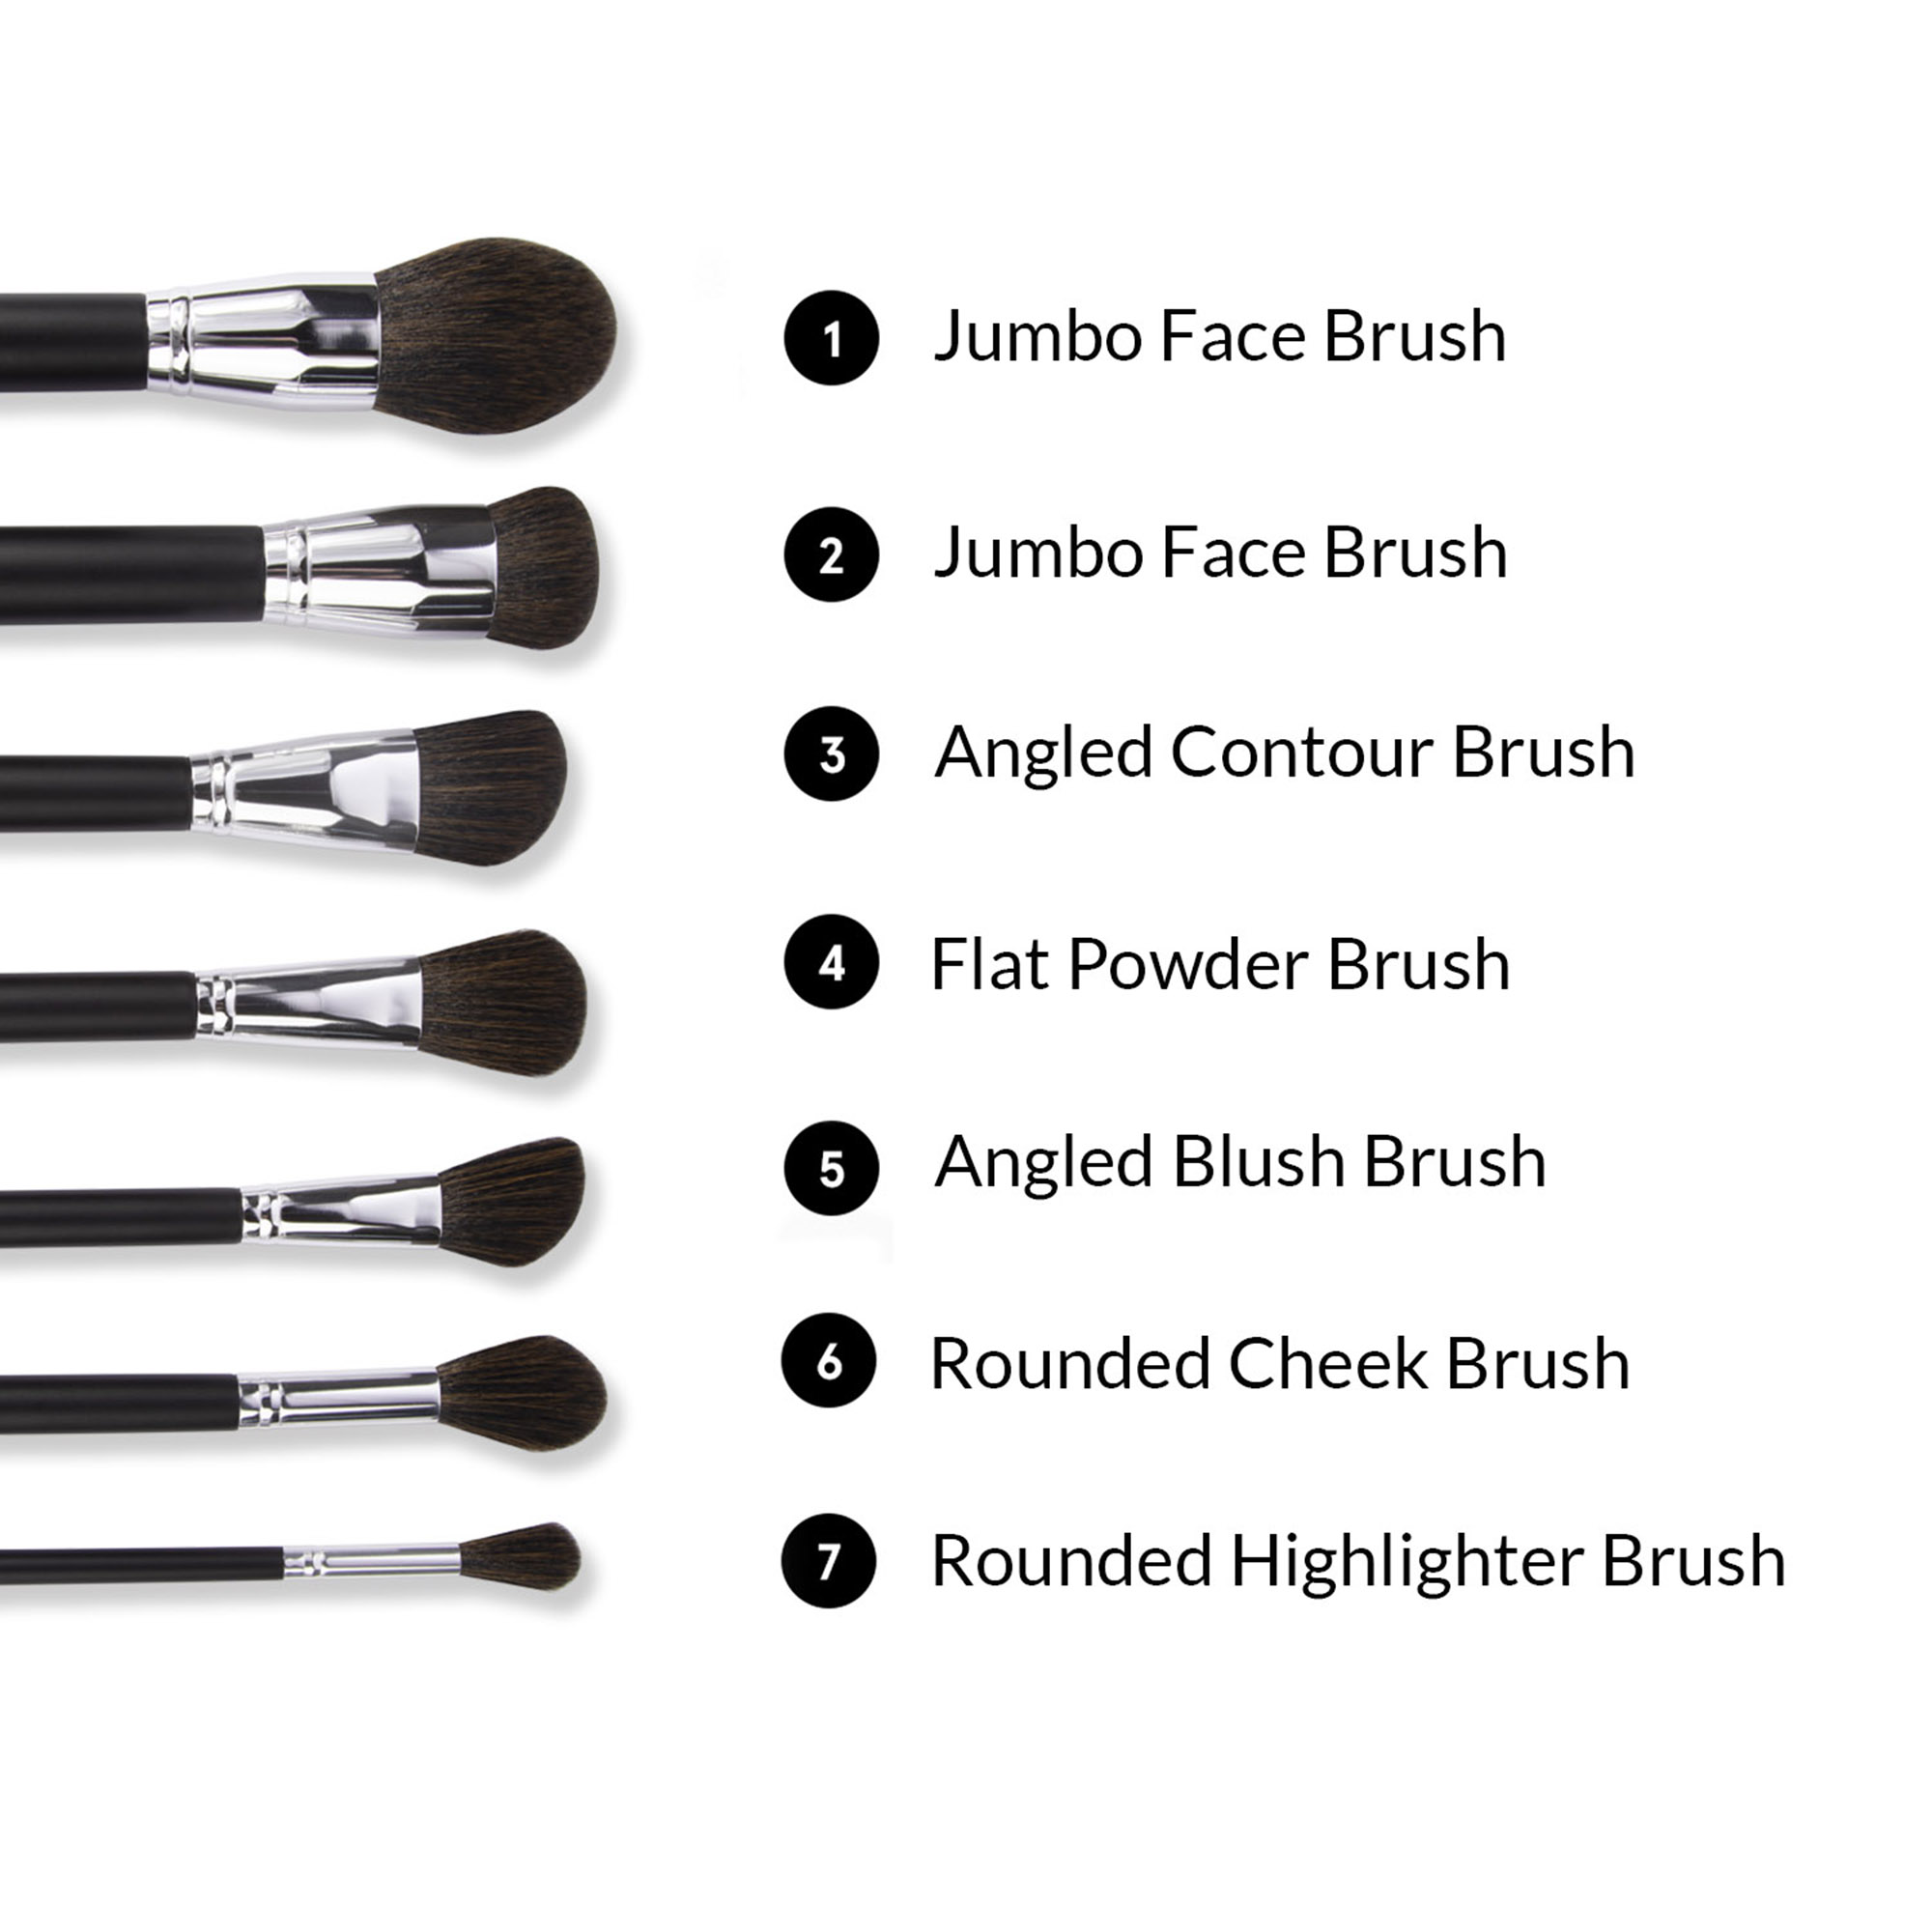 1 Jumbo Face Brush, 2  Jumbo Face Brush, 3 Angled Contour Brush, 4 Flat Powder Brush, 5 Angled Blush Brush, 6 Rounded Cheek Brush, 7 Rounded Highlighter Brush 